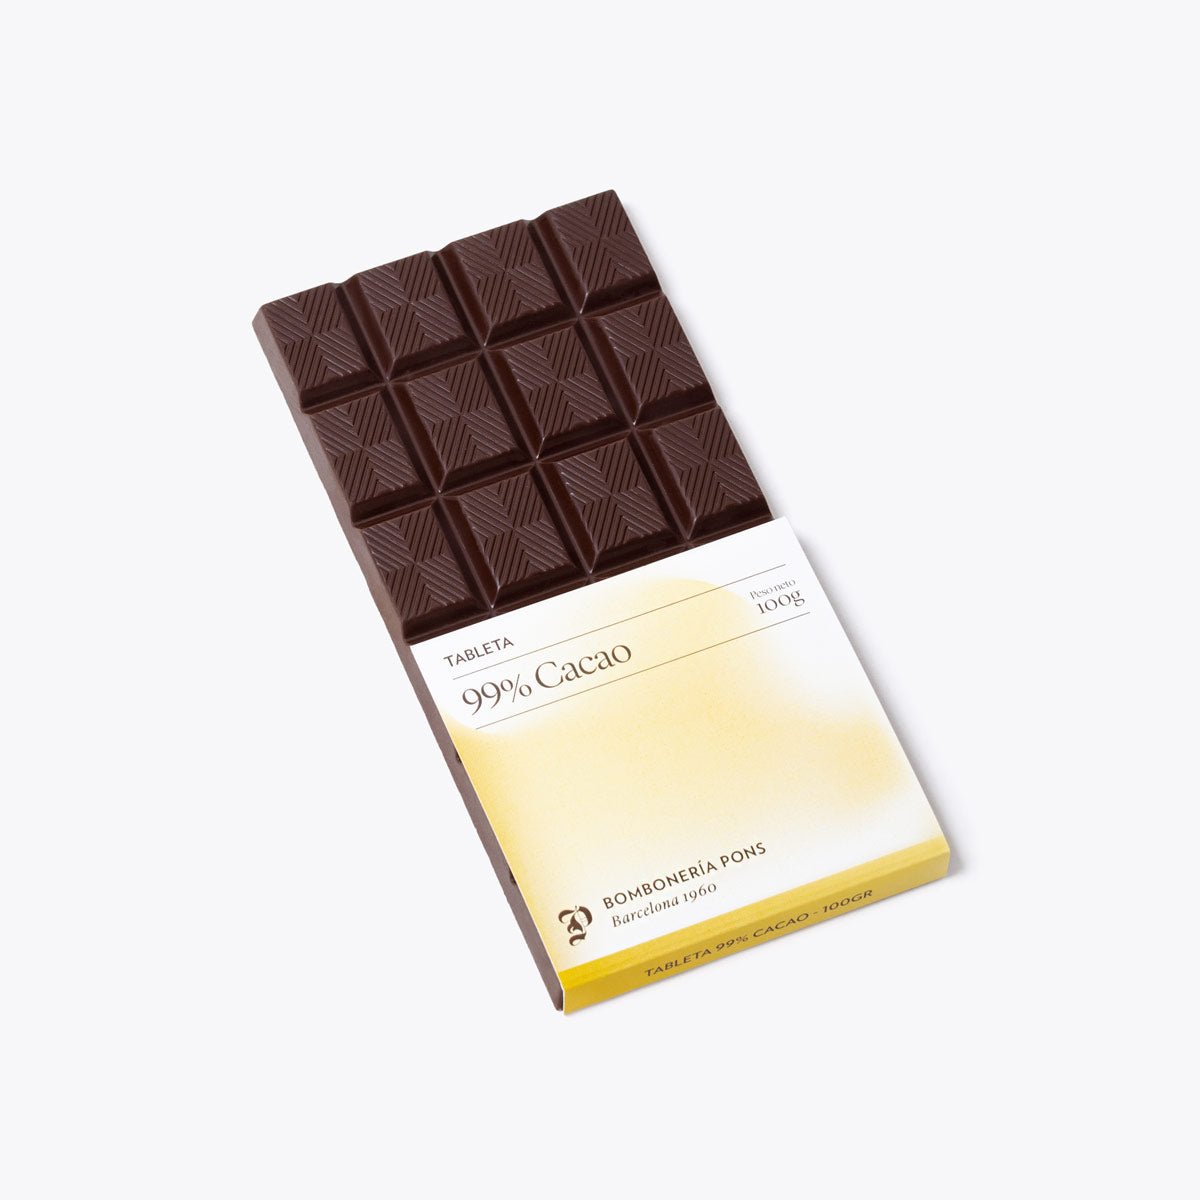 Tableta 99% Cacao - 100g - Bombonería Pons - Tabletas Clásicas